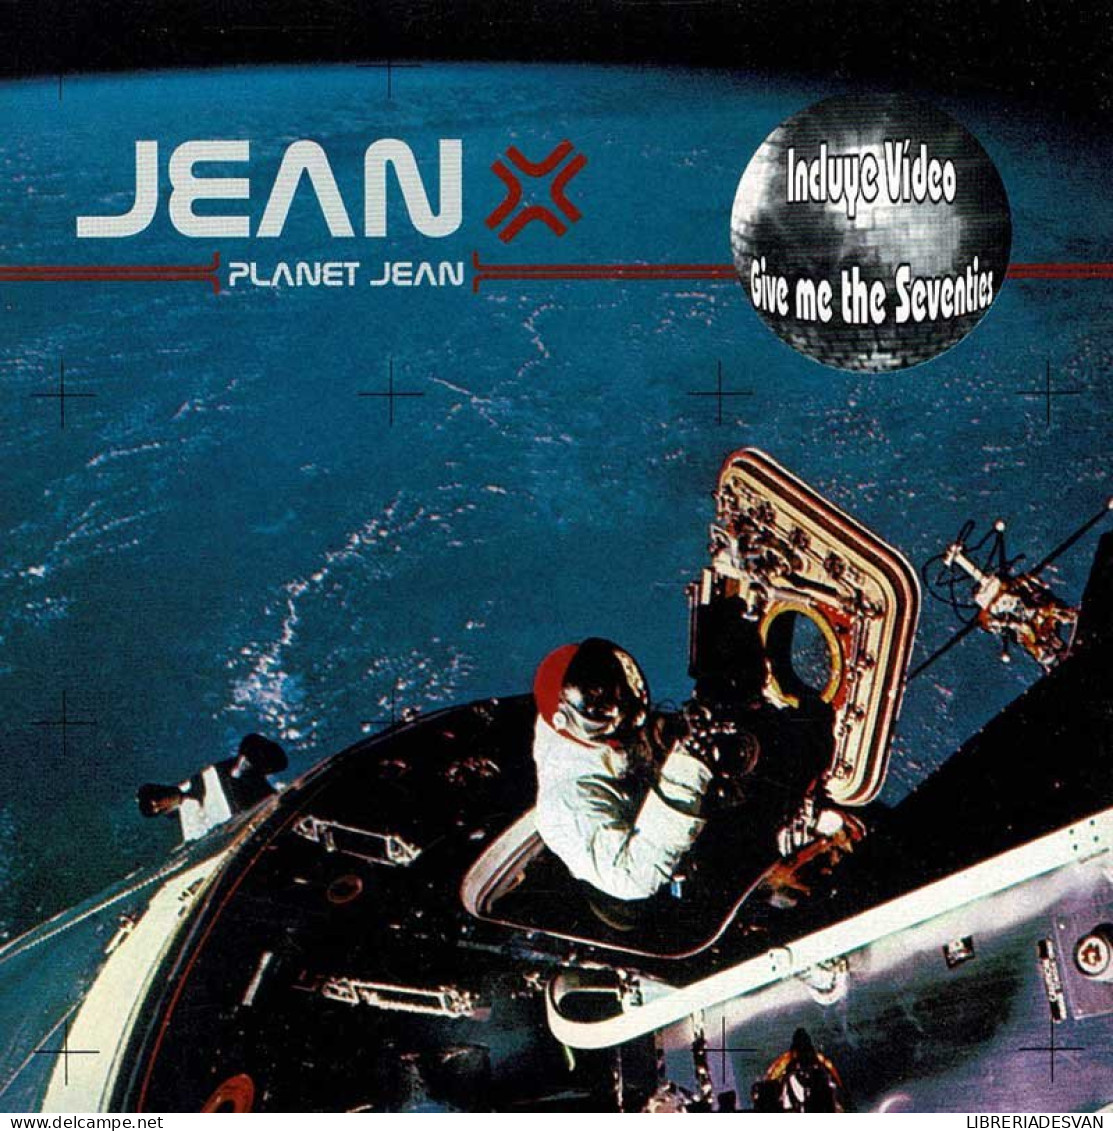 Jean - Planet Jean. CD - Dance, Techno & House